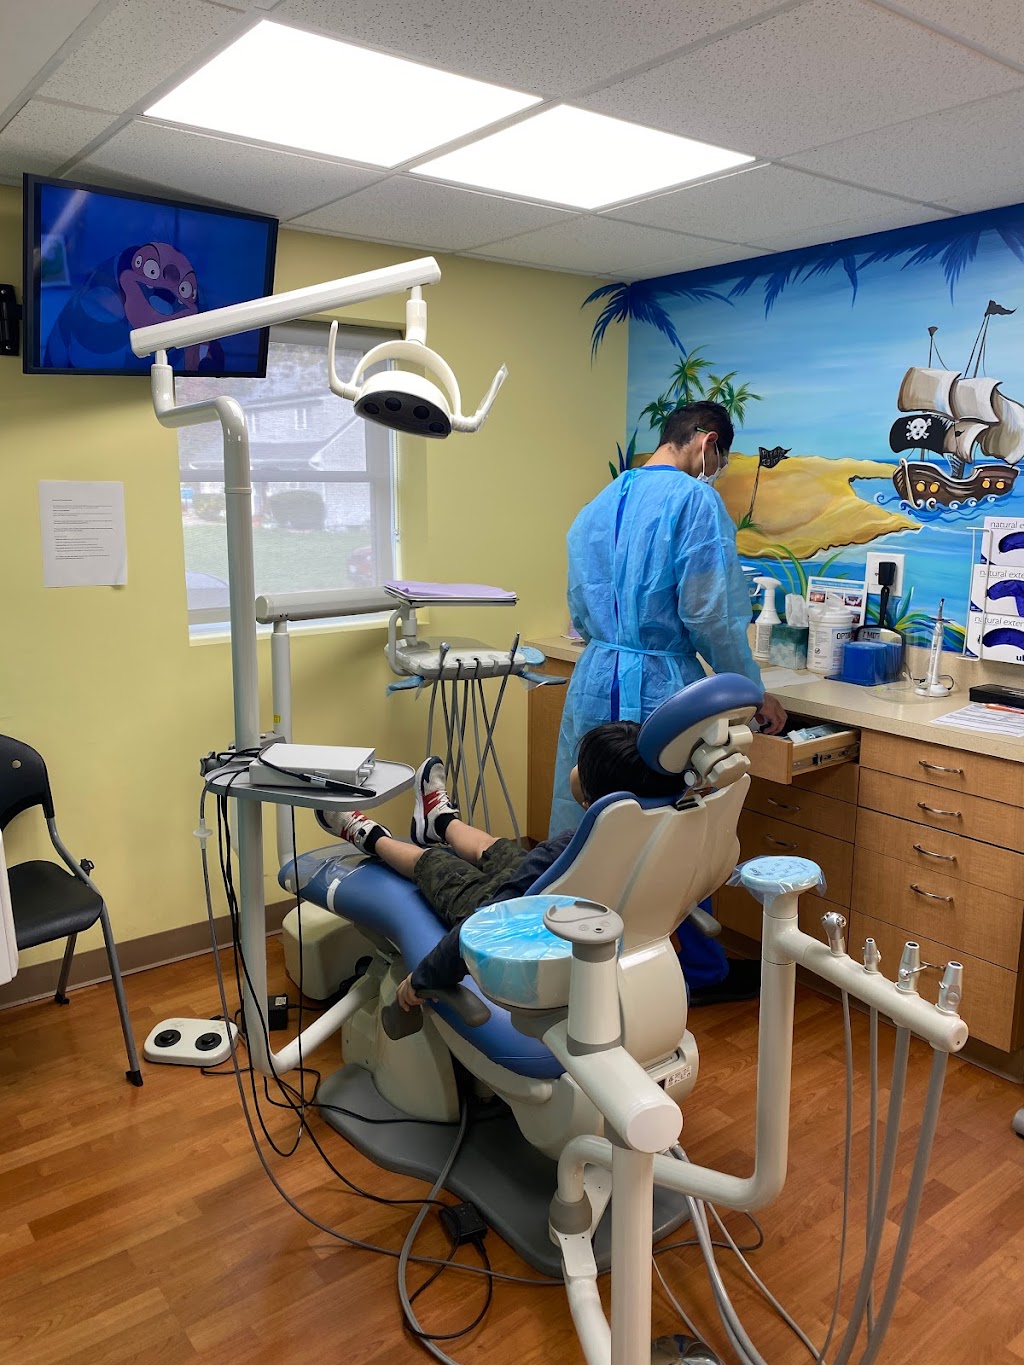 Dental Smiles 4 Kids --Pediatric Dentistry | 919 Deer Pk Ave, North Babylon, NY 11703 | Phone: (631) 893-7000